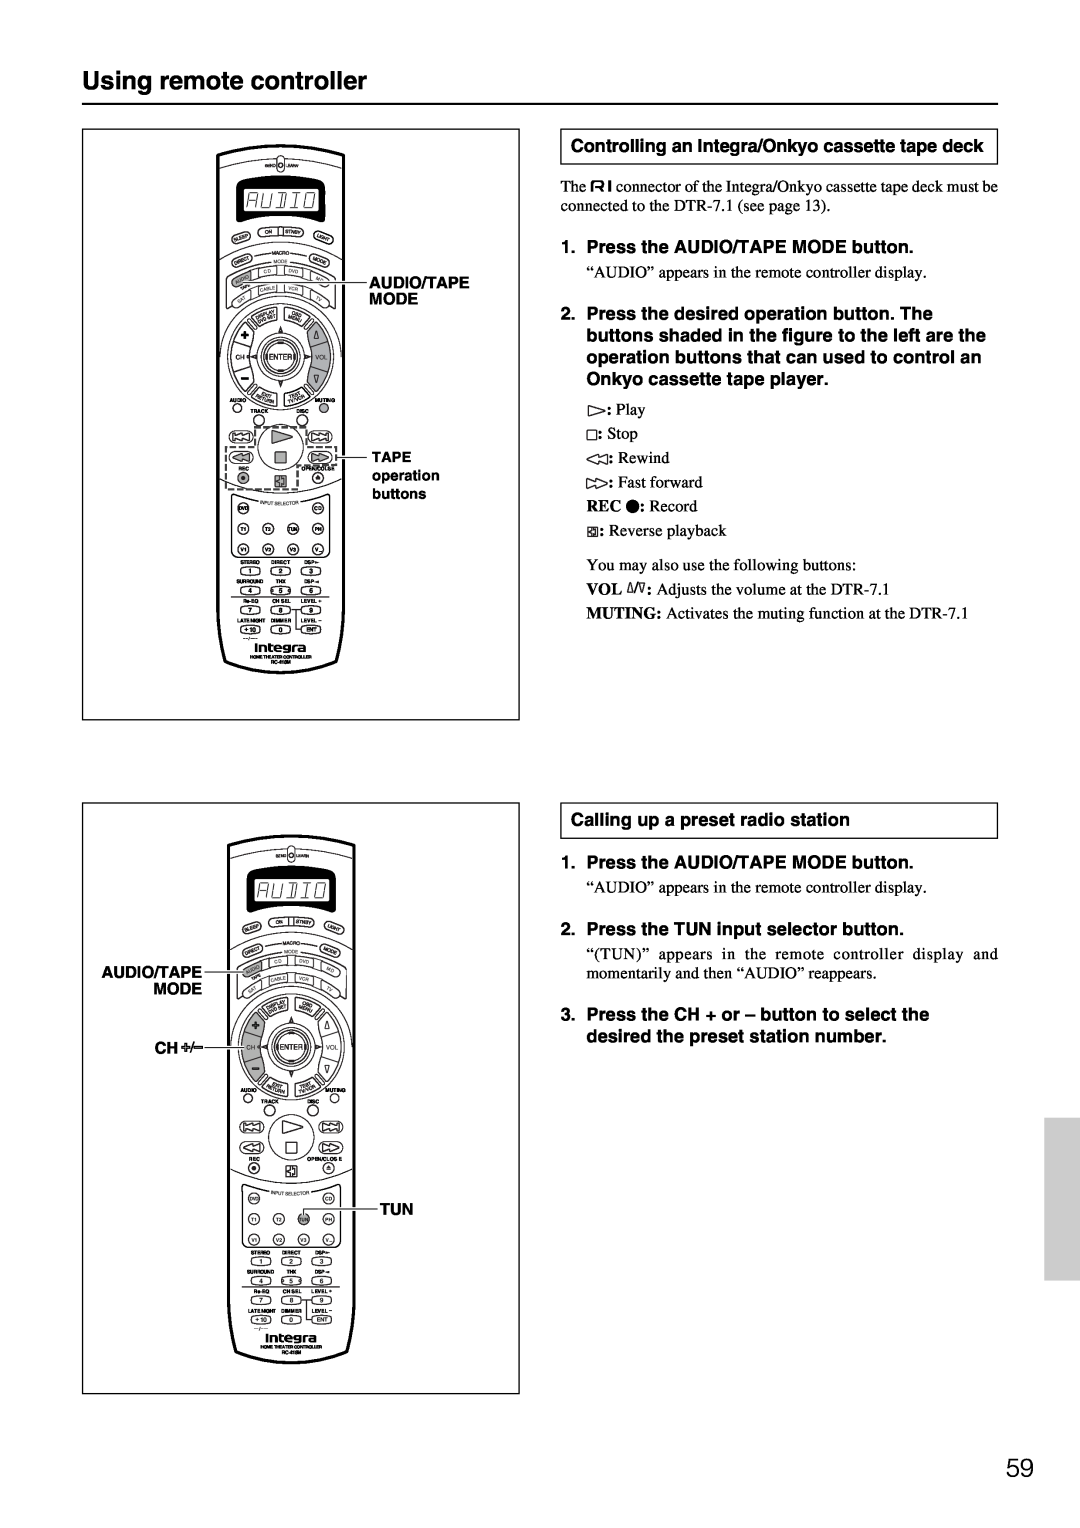 Integra DTR-7.1 appendix Using remote controller, Controlling an Integra/Onkyo cassette tape deck 